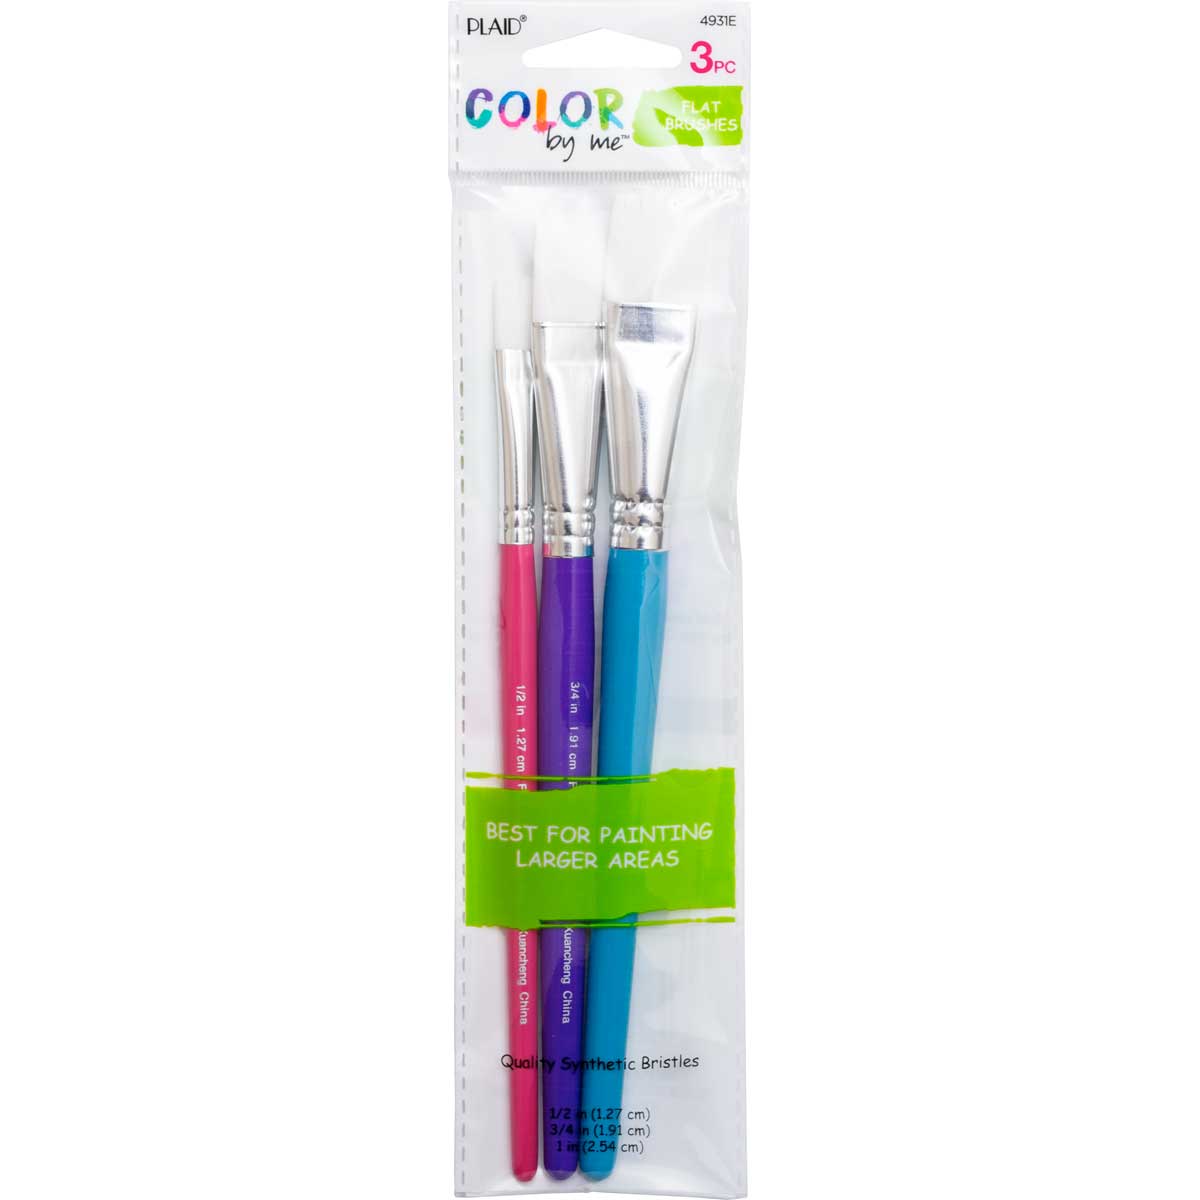 Plaid ® Color By Me™ Brush Sets - Flat Brushes, 3 pc. - 4931E